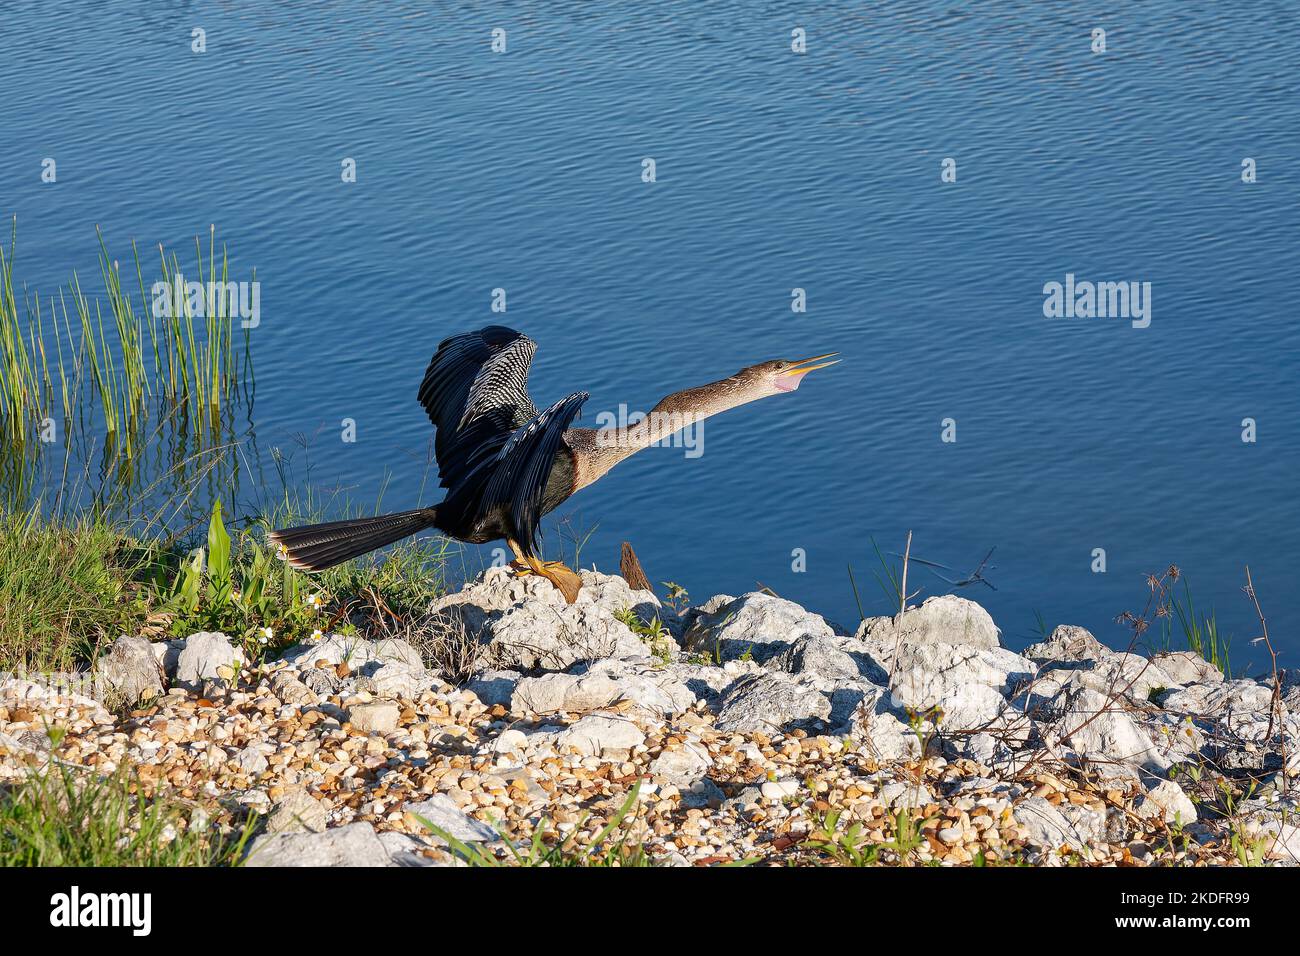 anhinga, neck reaching out over water, beak open, wings spread, just landed, bird, wildlife, animal, snakebird, waterbird, darter, Florida Stock Photo